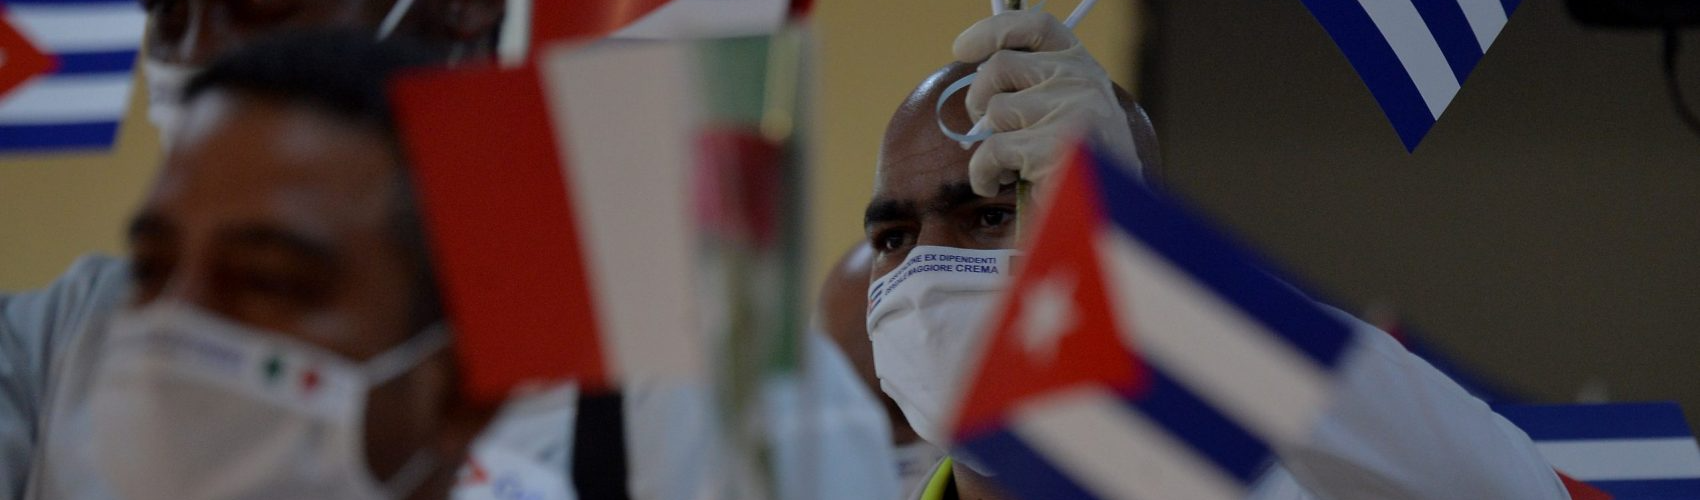 Mesmo com o menor número de mortes por Covid-19 da América Latina, avanço do coronavírus preocupa Cuba